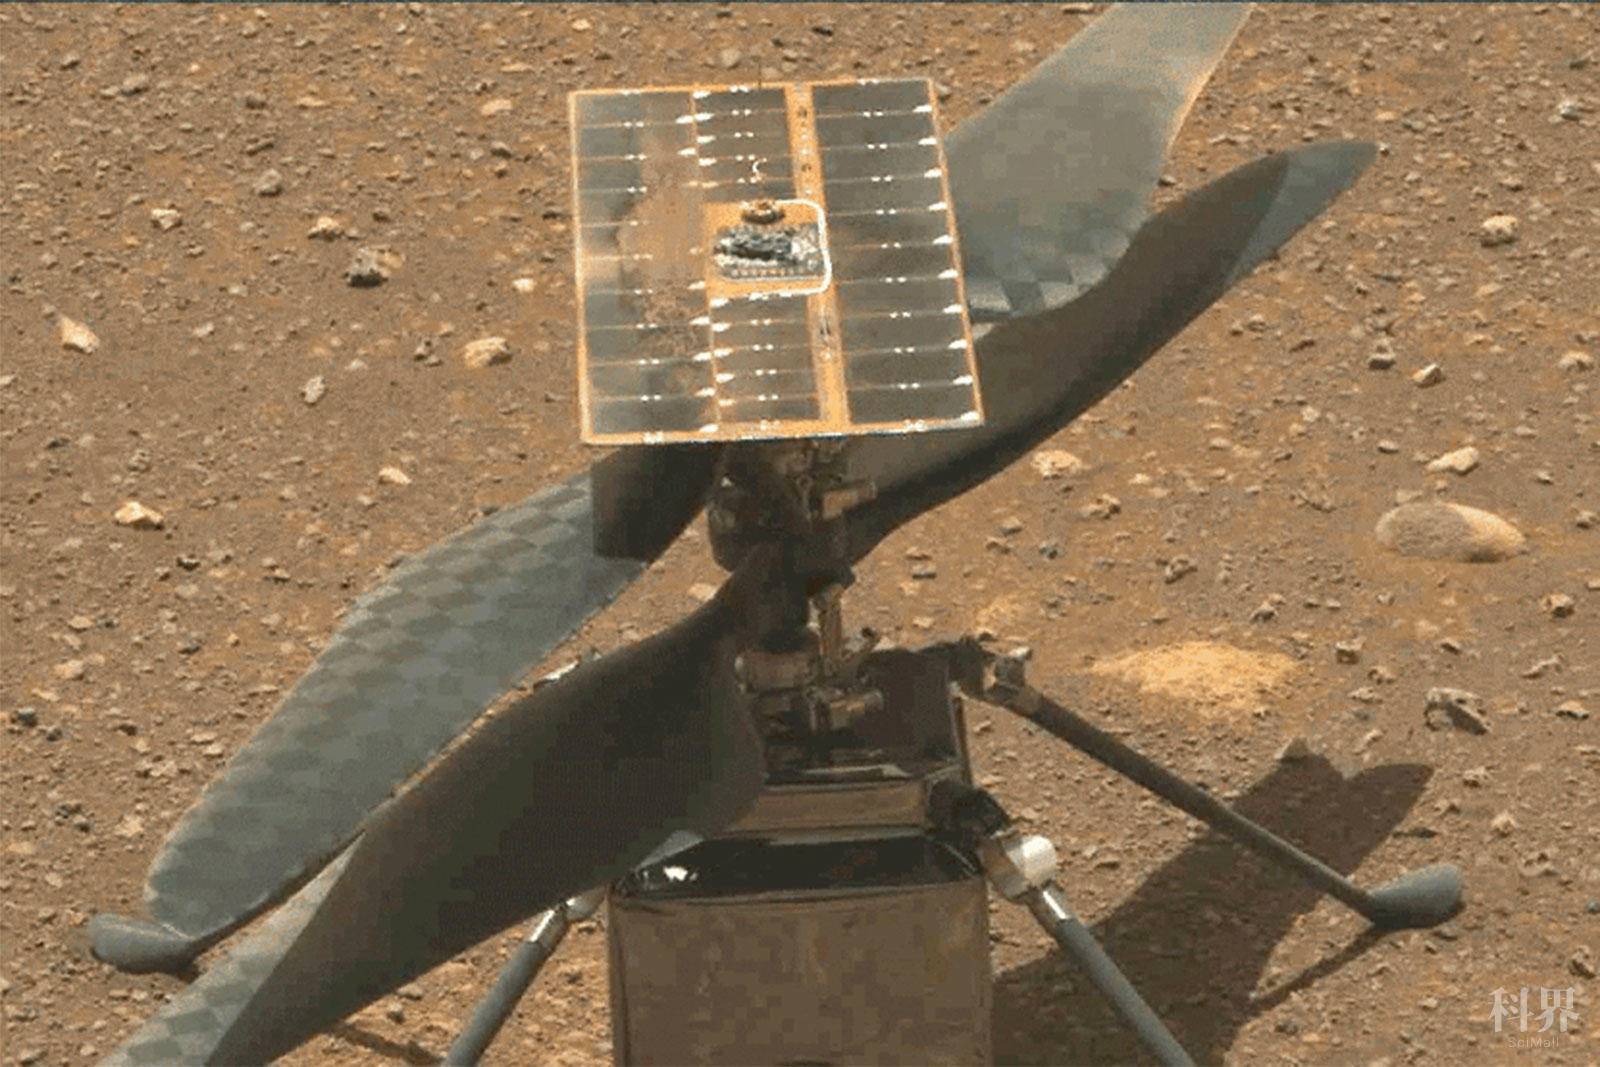 Ingenuity Mars helicopter